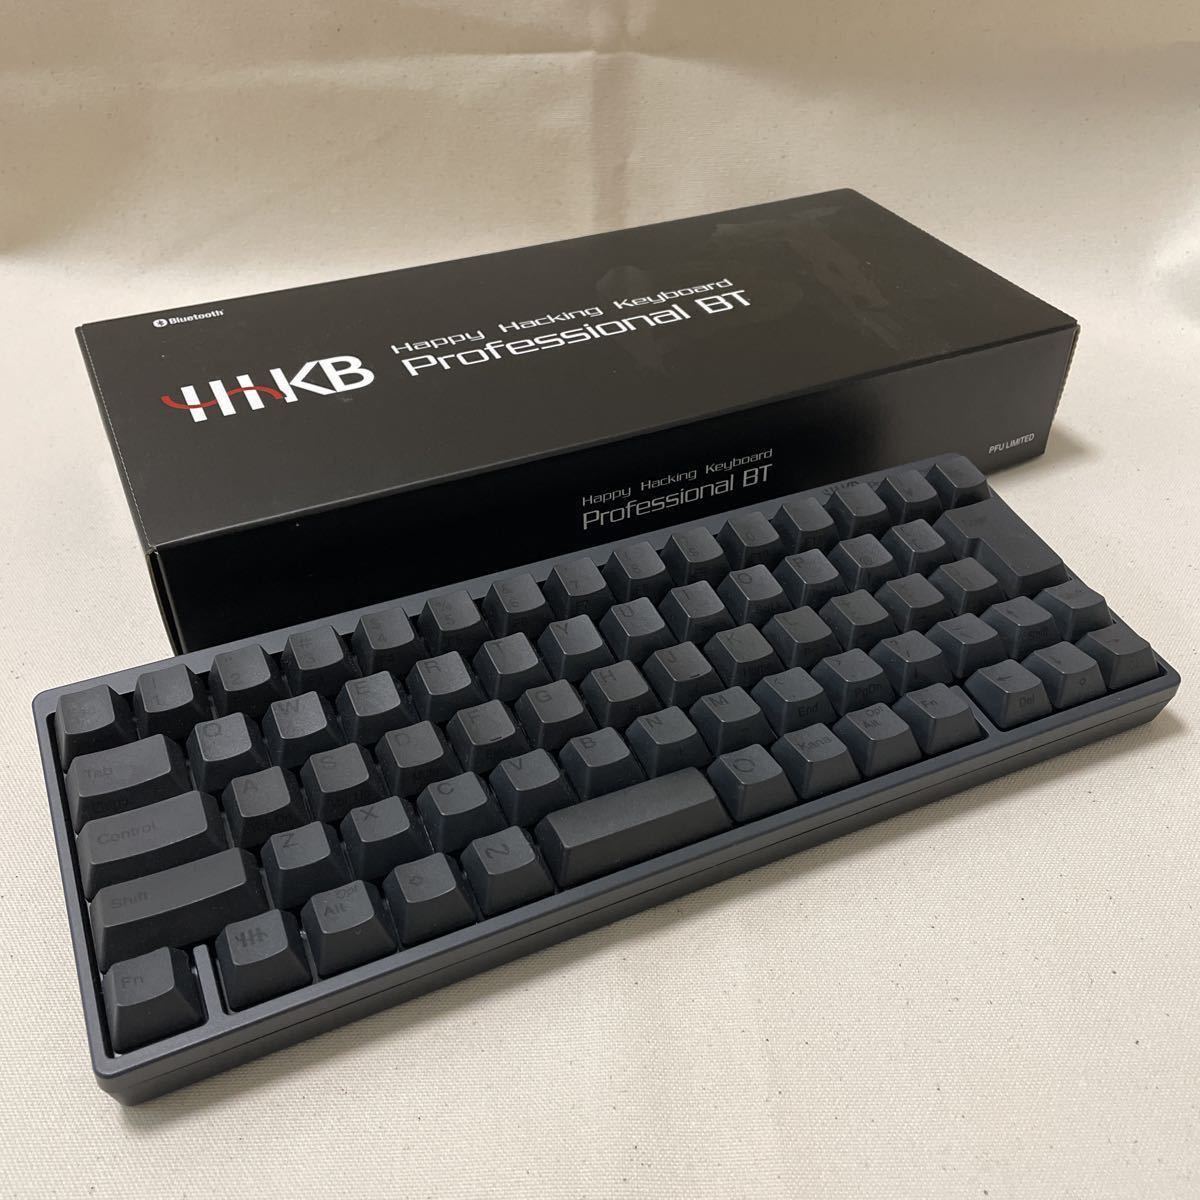 【国内発送】 【美品】HHKB Professional BT Bluetoothキーボード墨 PC周辺機器